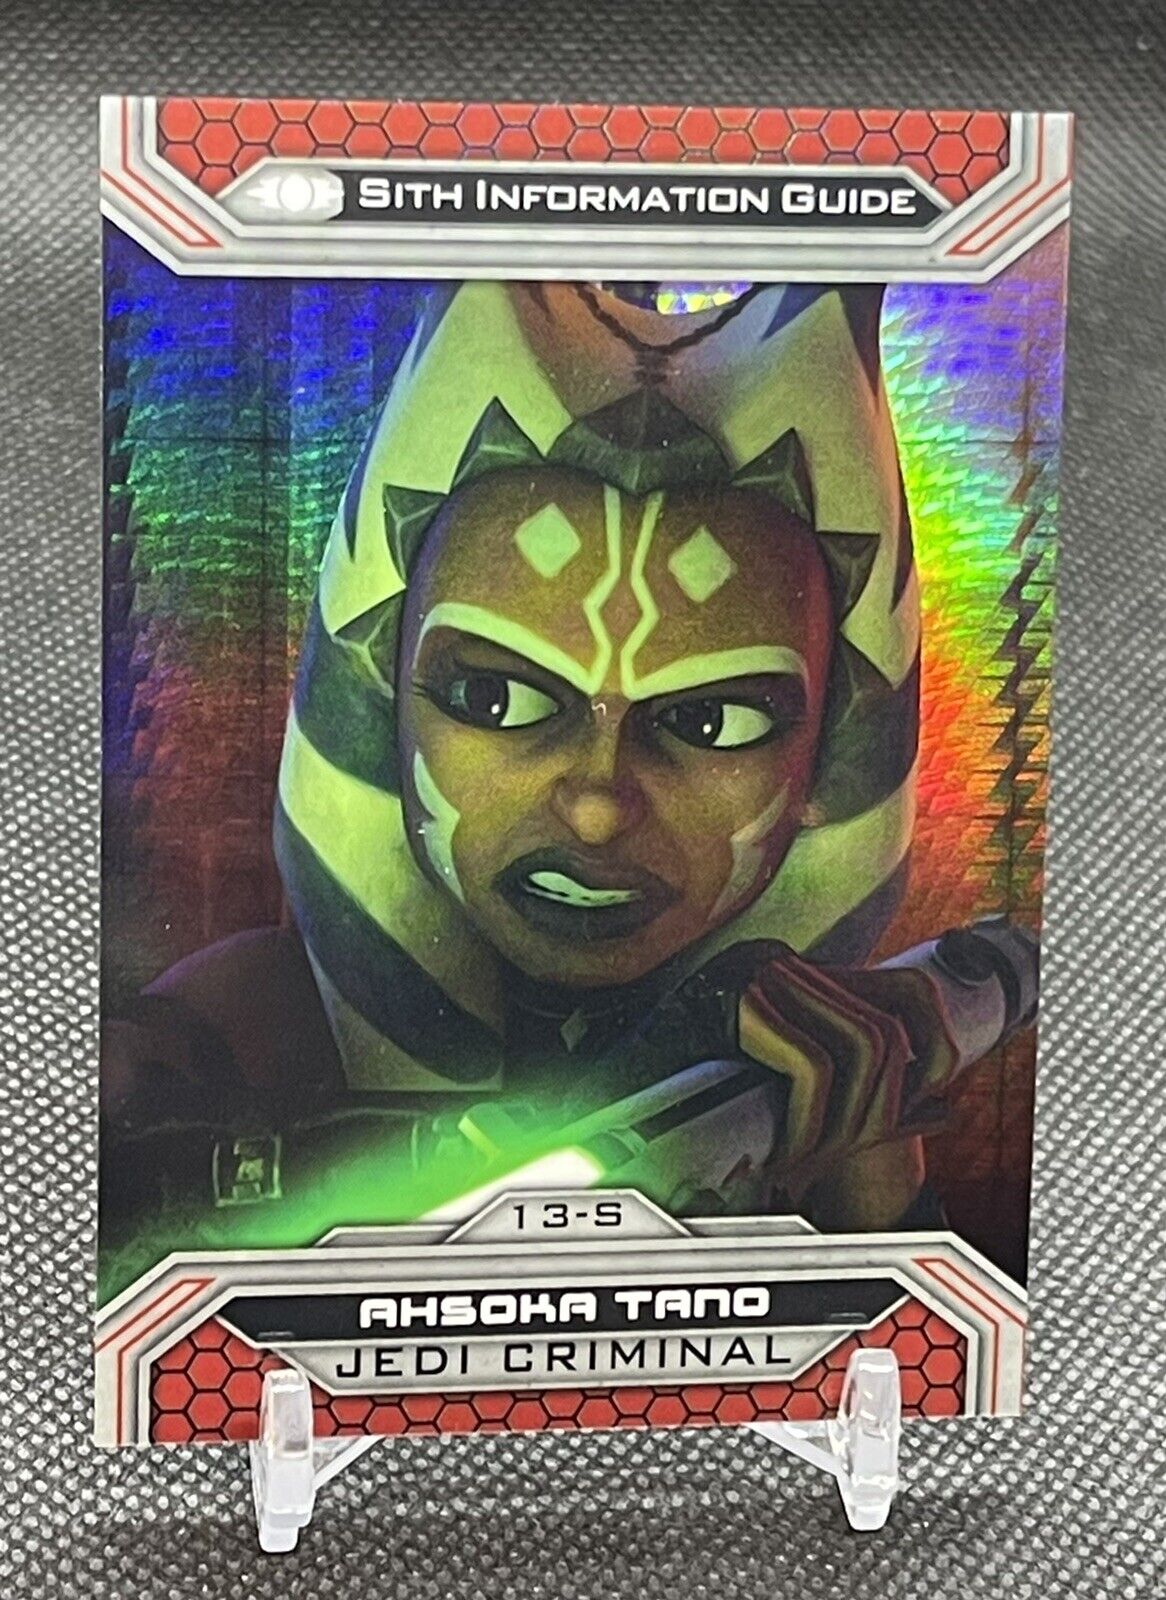 2015 Topps Chrome Star Wars Ahsoka Tano Refractor Prism /199 🎆